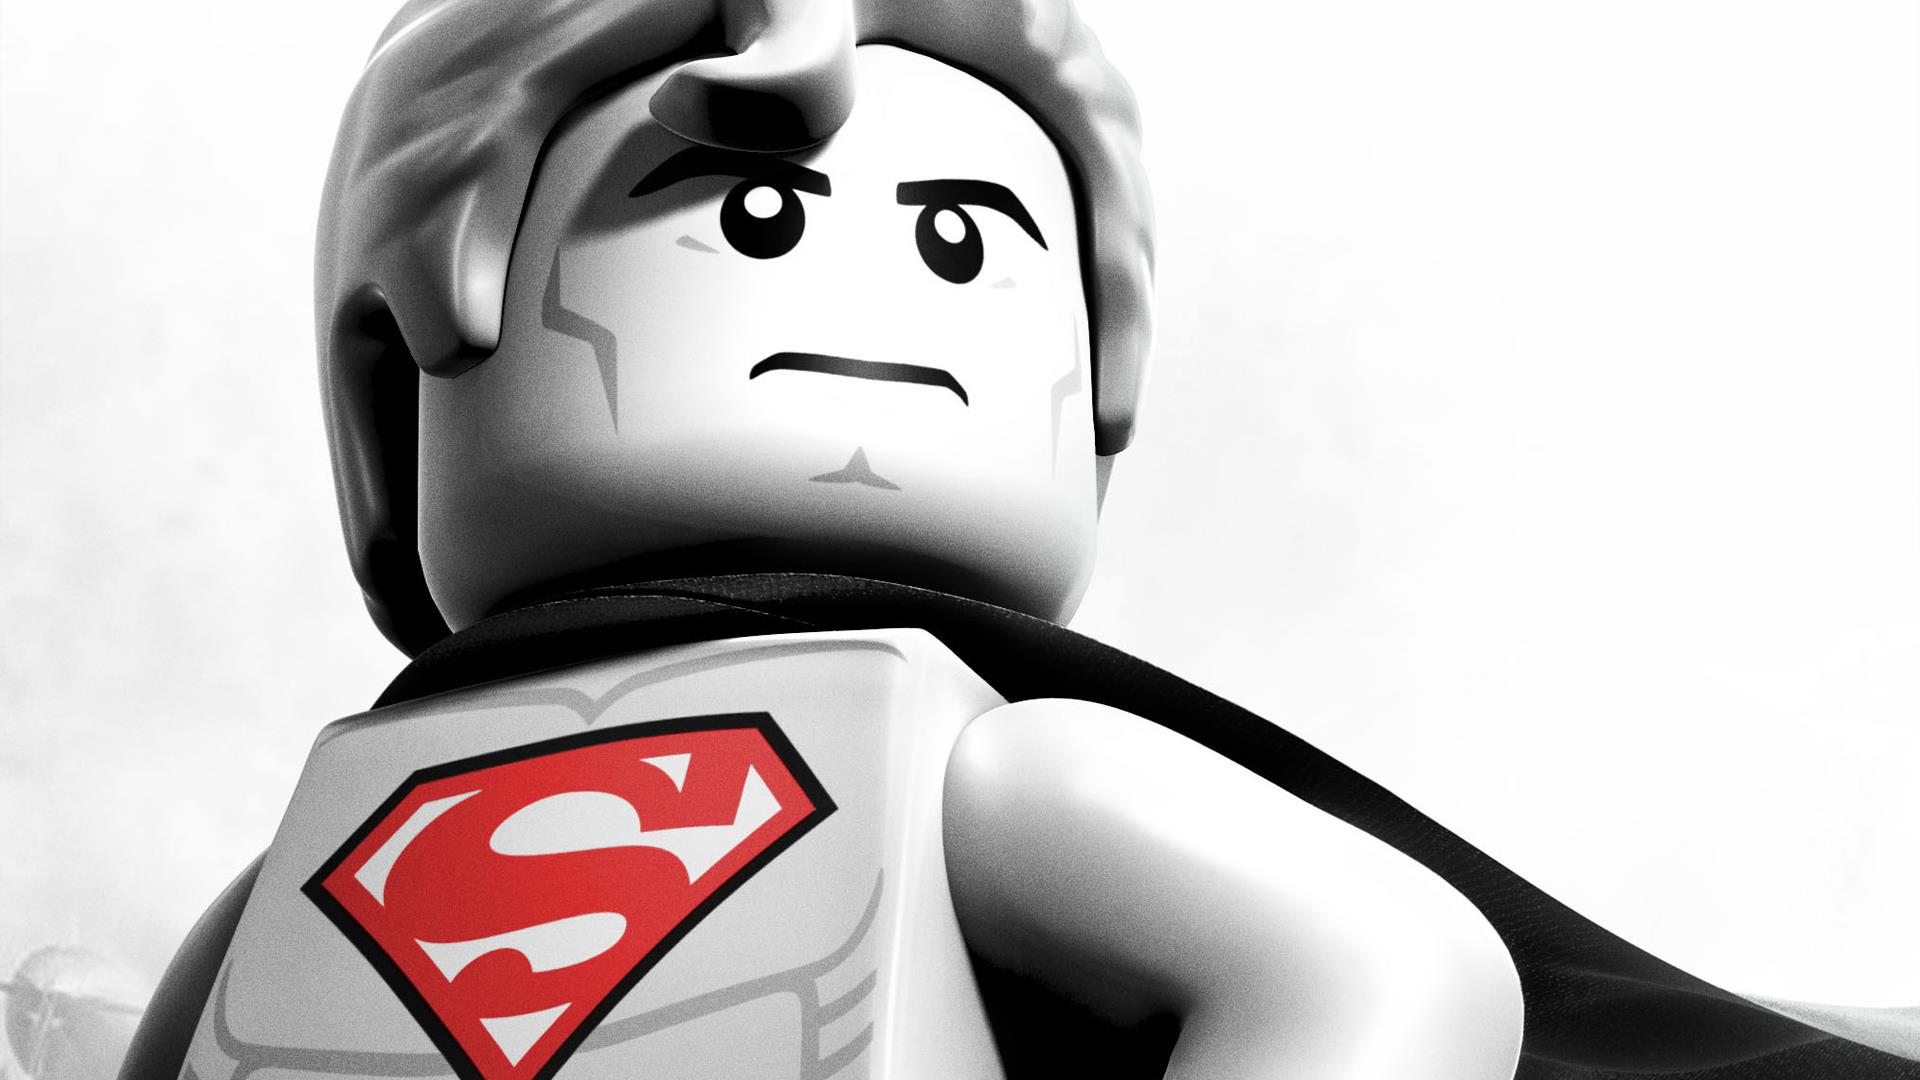 video game, lego batman 2: dc super heroes, superman, lego